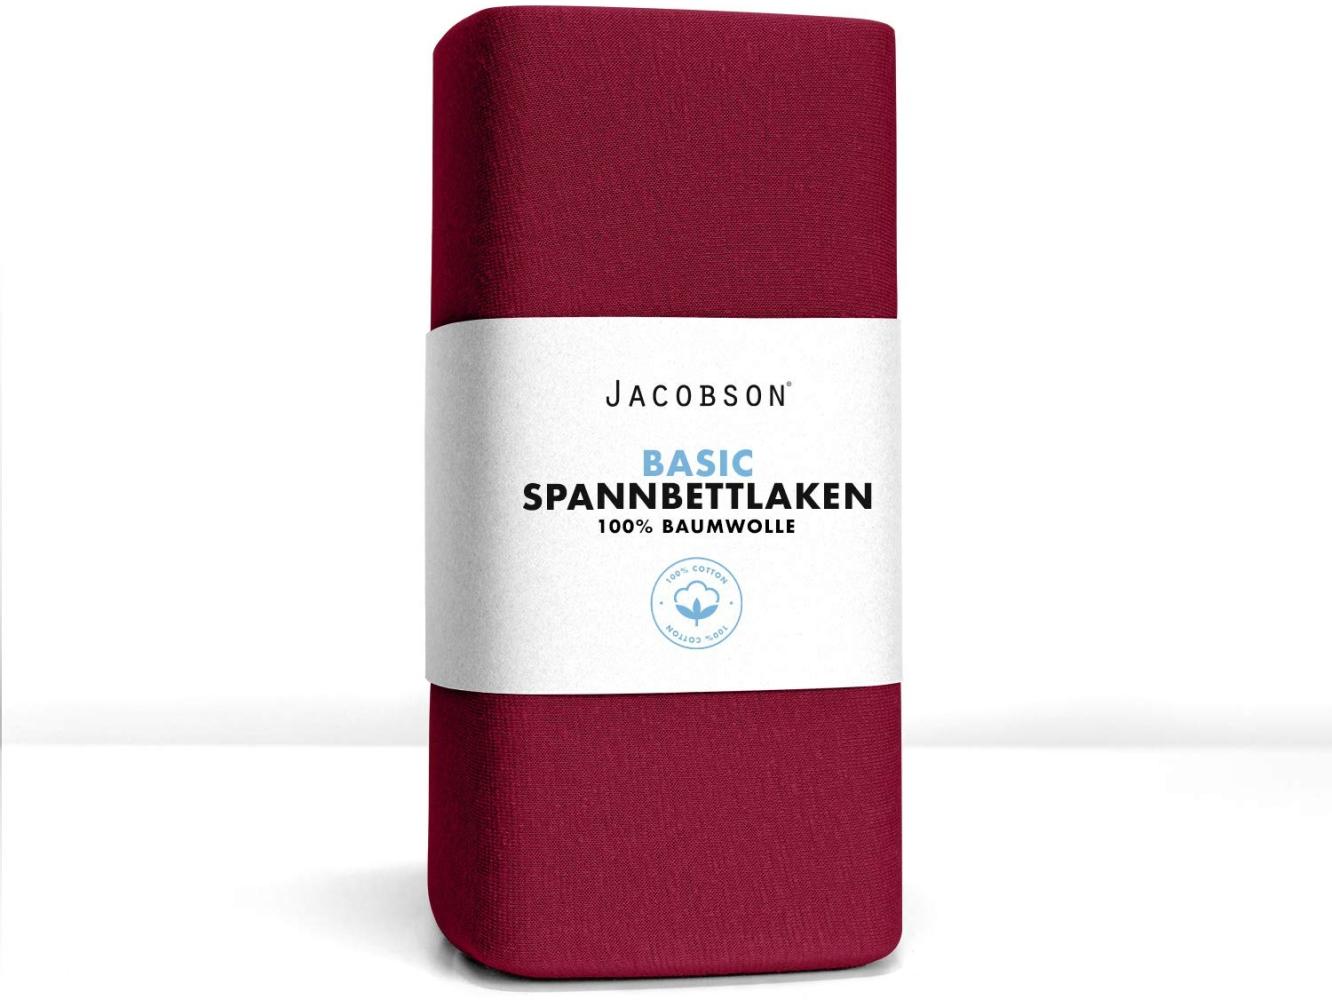 Jacobson Jersey Spannbettlaken Spannbetttuch Baumwolle Bettlaken (180x200-200x220 cm, Bordeaux) Bild 1